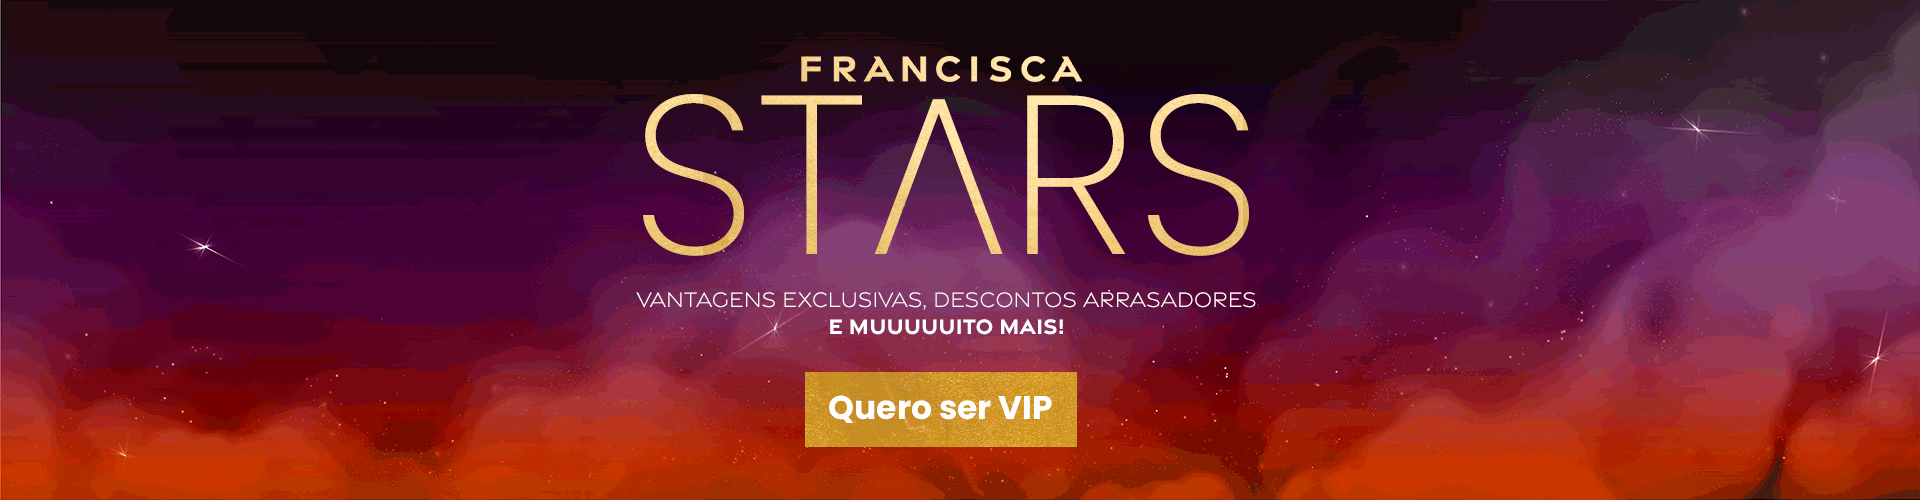 Francisca Stars